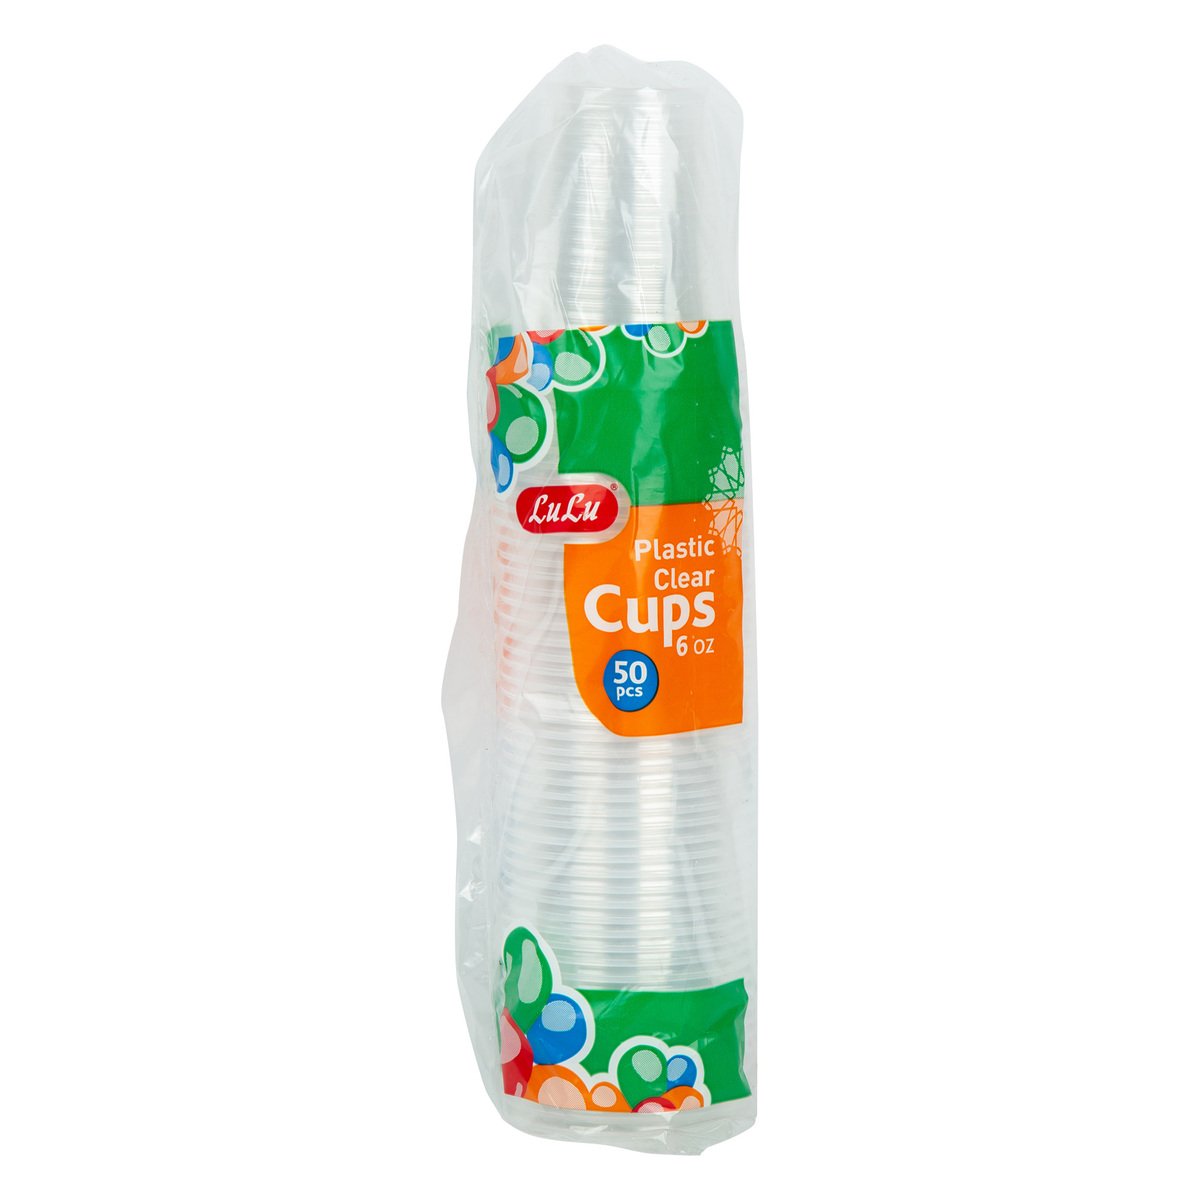 LuLu Plastic Clear Cups Size 6oz 50pcs